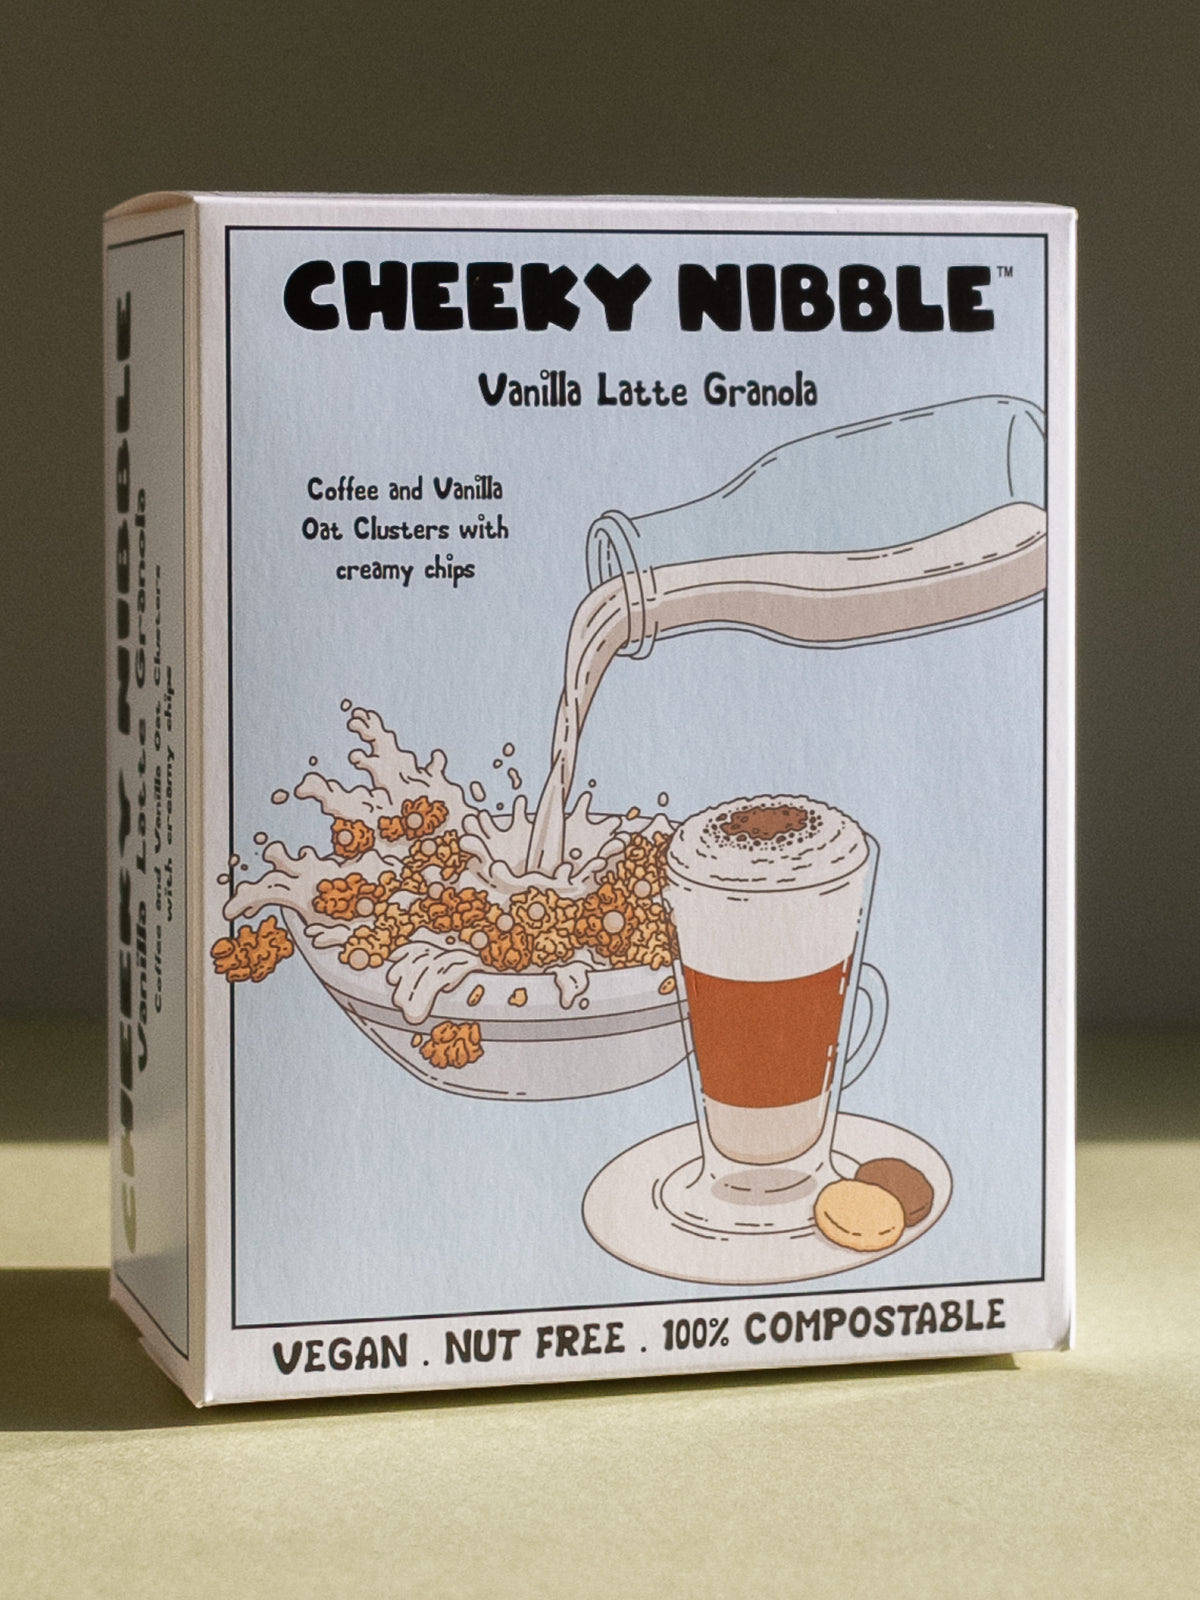 Vanilla Latte Granola by Cheeky Nibble